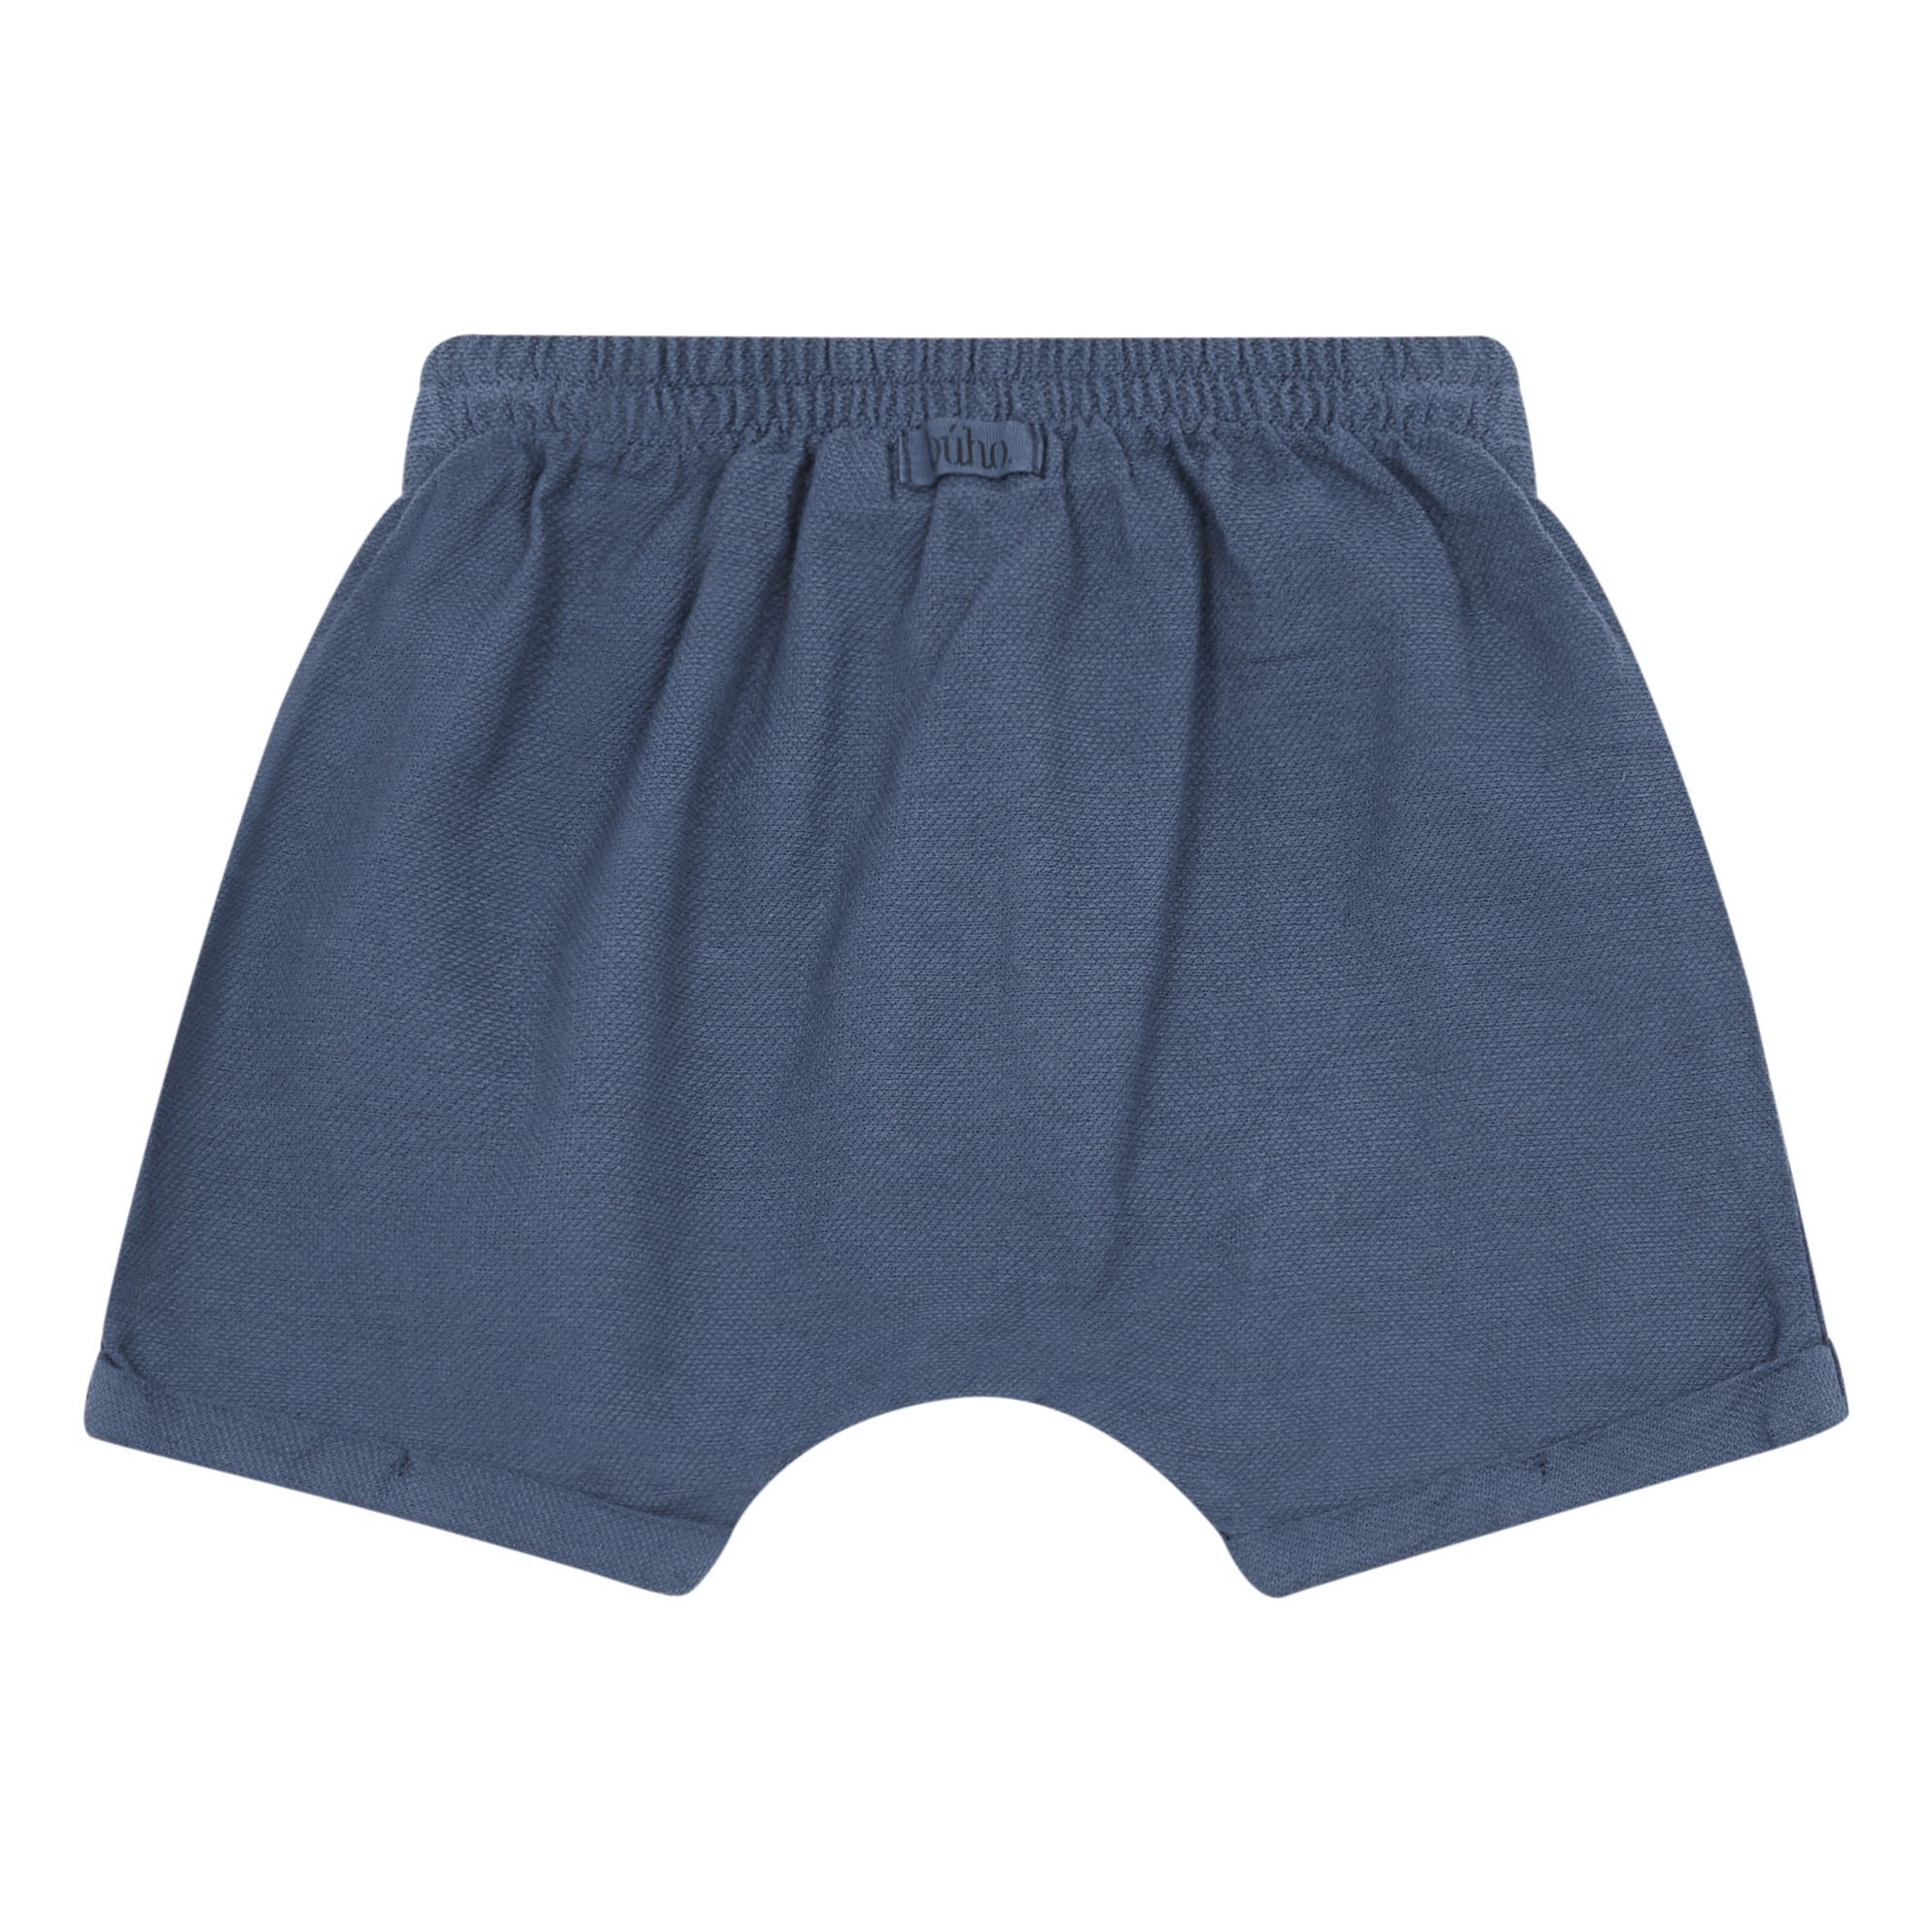 Lucas Organic Cotton Shorts Navy blue Buho Fashion Baby